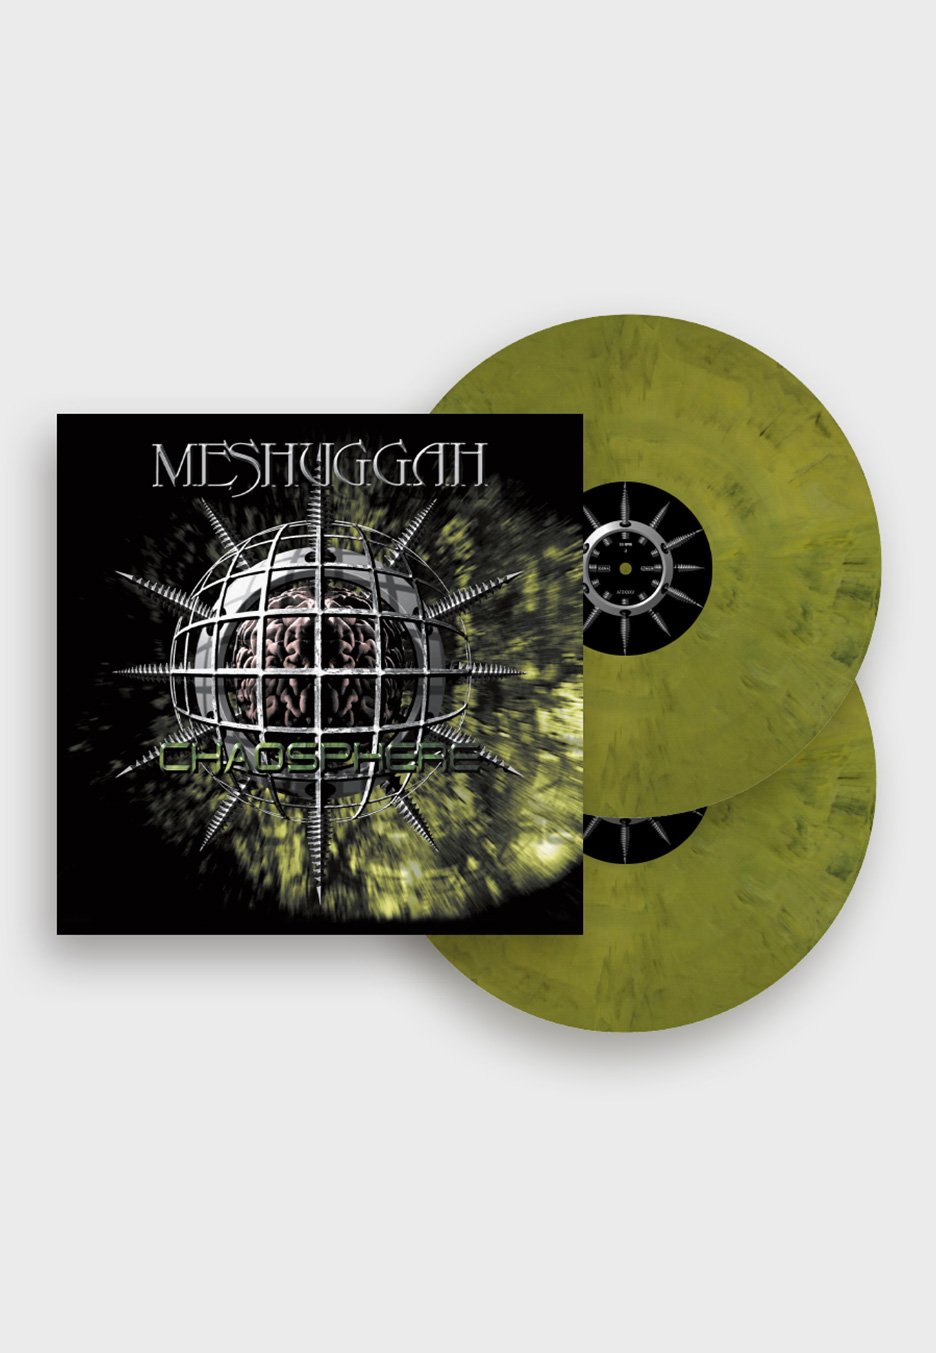 Meshuggah - Chaosphere (25th Anniversary Remaster) Ltd. White/Orange/Black - Marbled 2 Vinyl